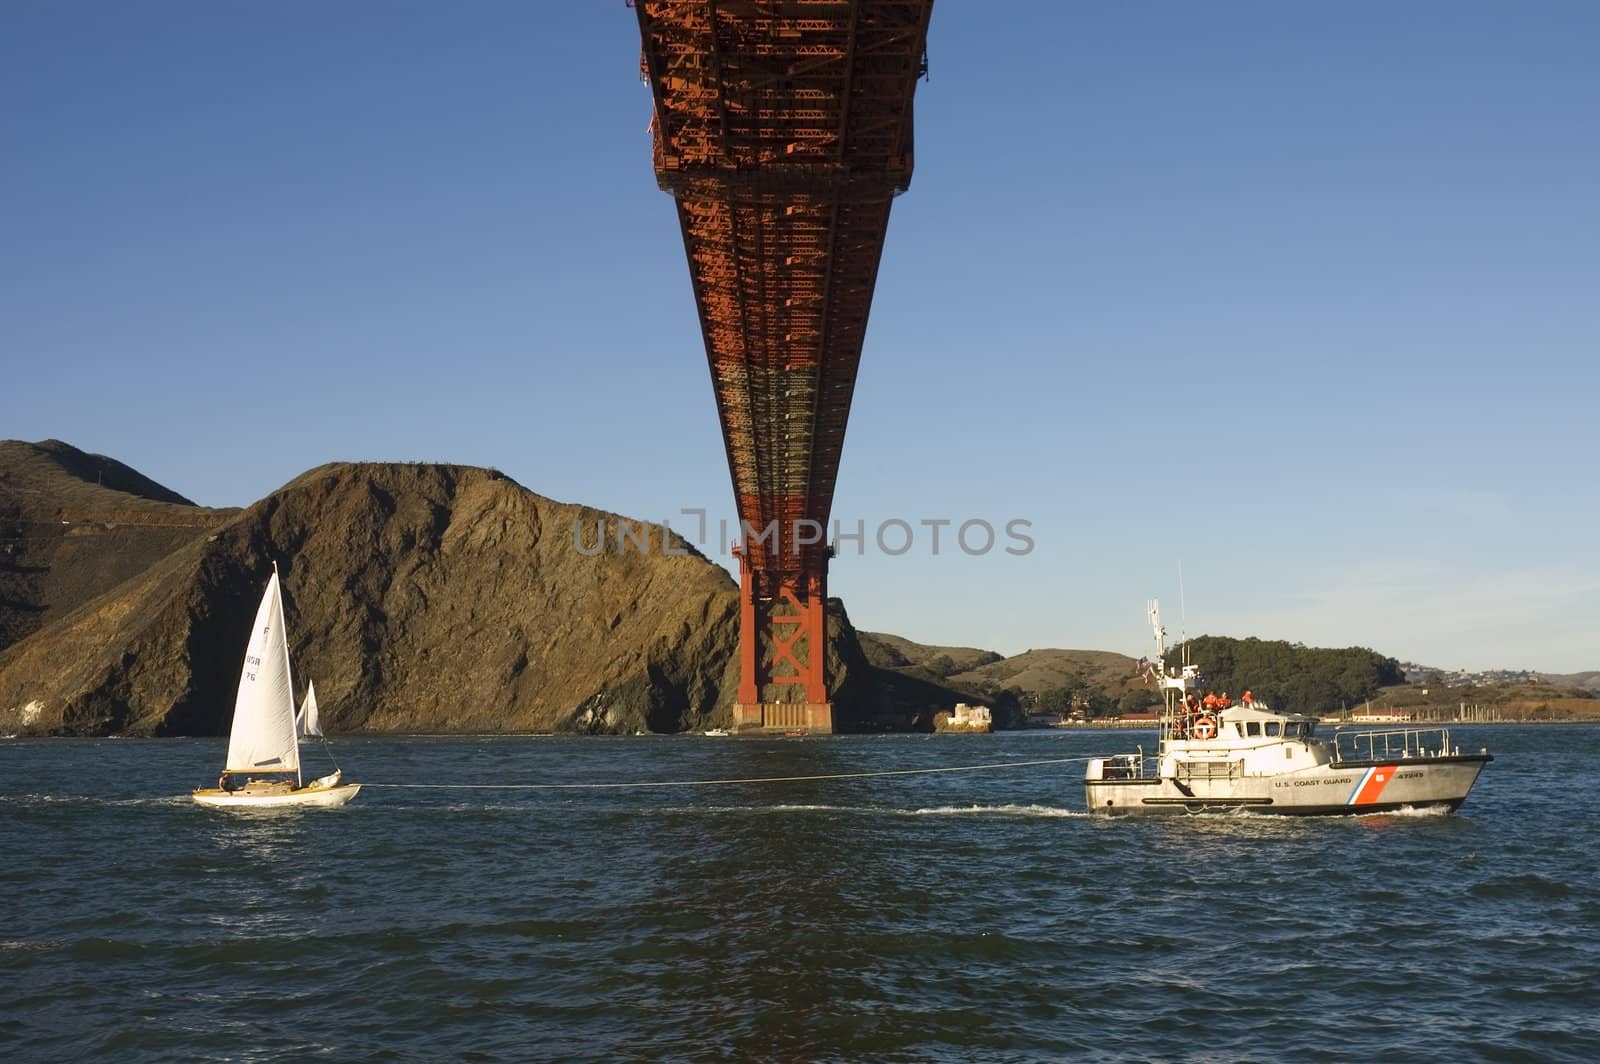 Editorial;
What: Coast guard rescue of a small sailboat
Where: Golden Gate, San Francisco
When: 11/15/2008